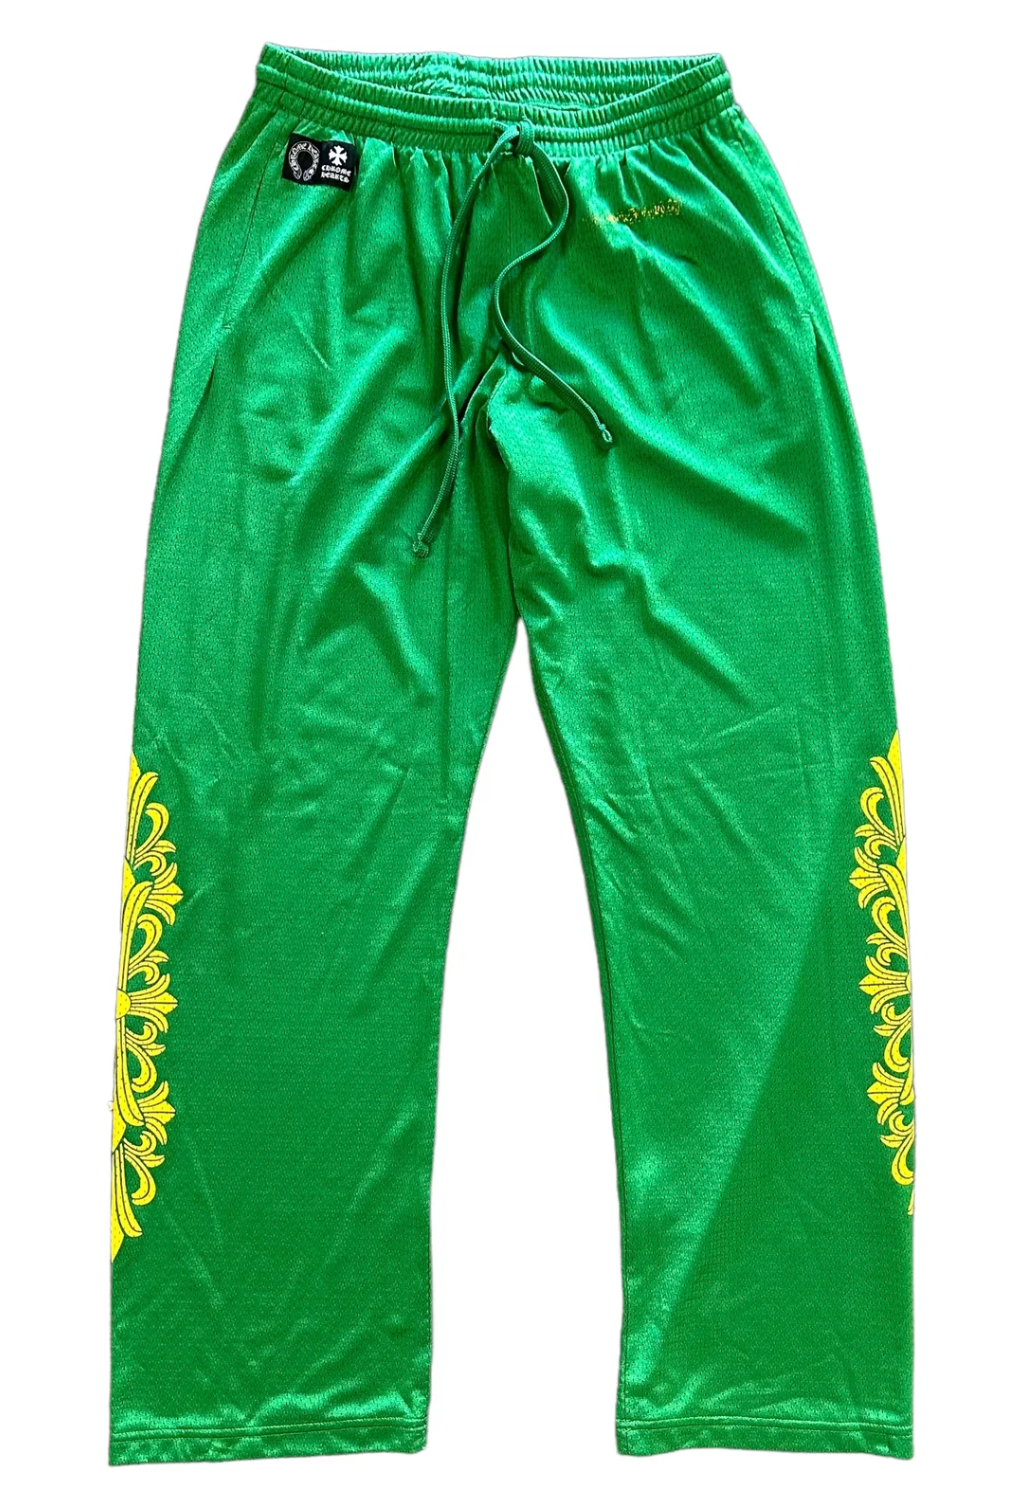 Chrome Hearts Green Mesh Jersey Pants